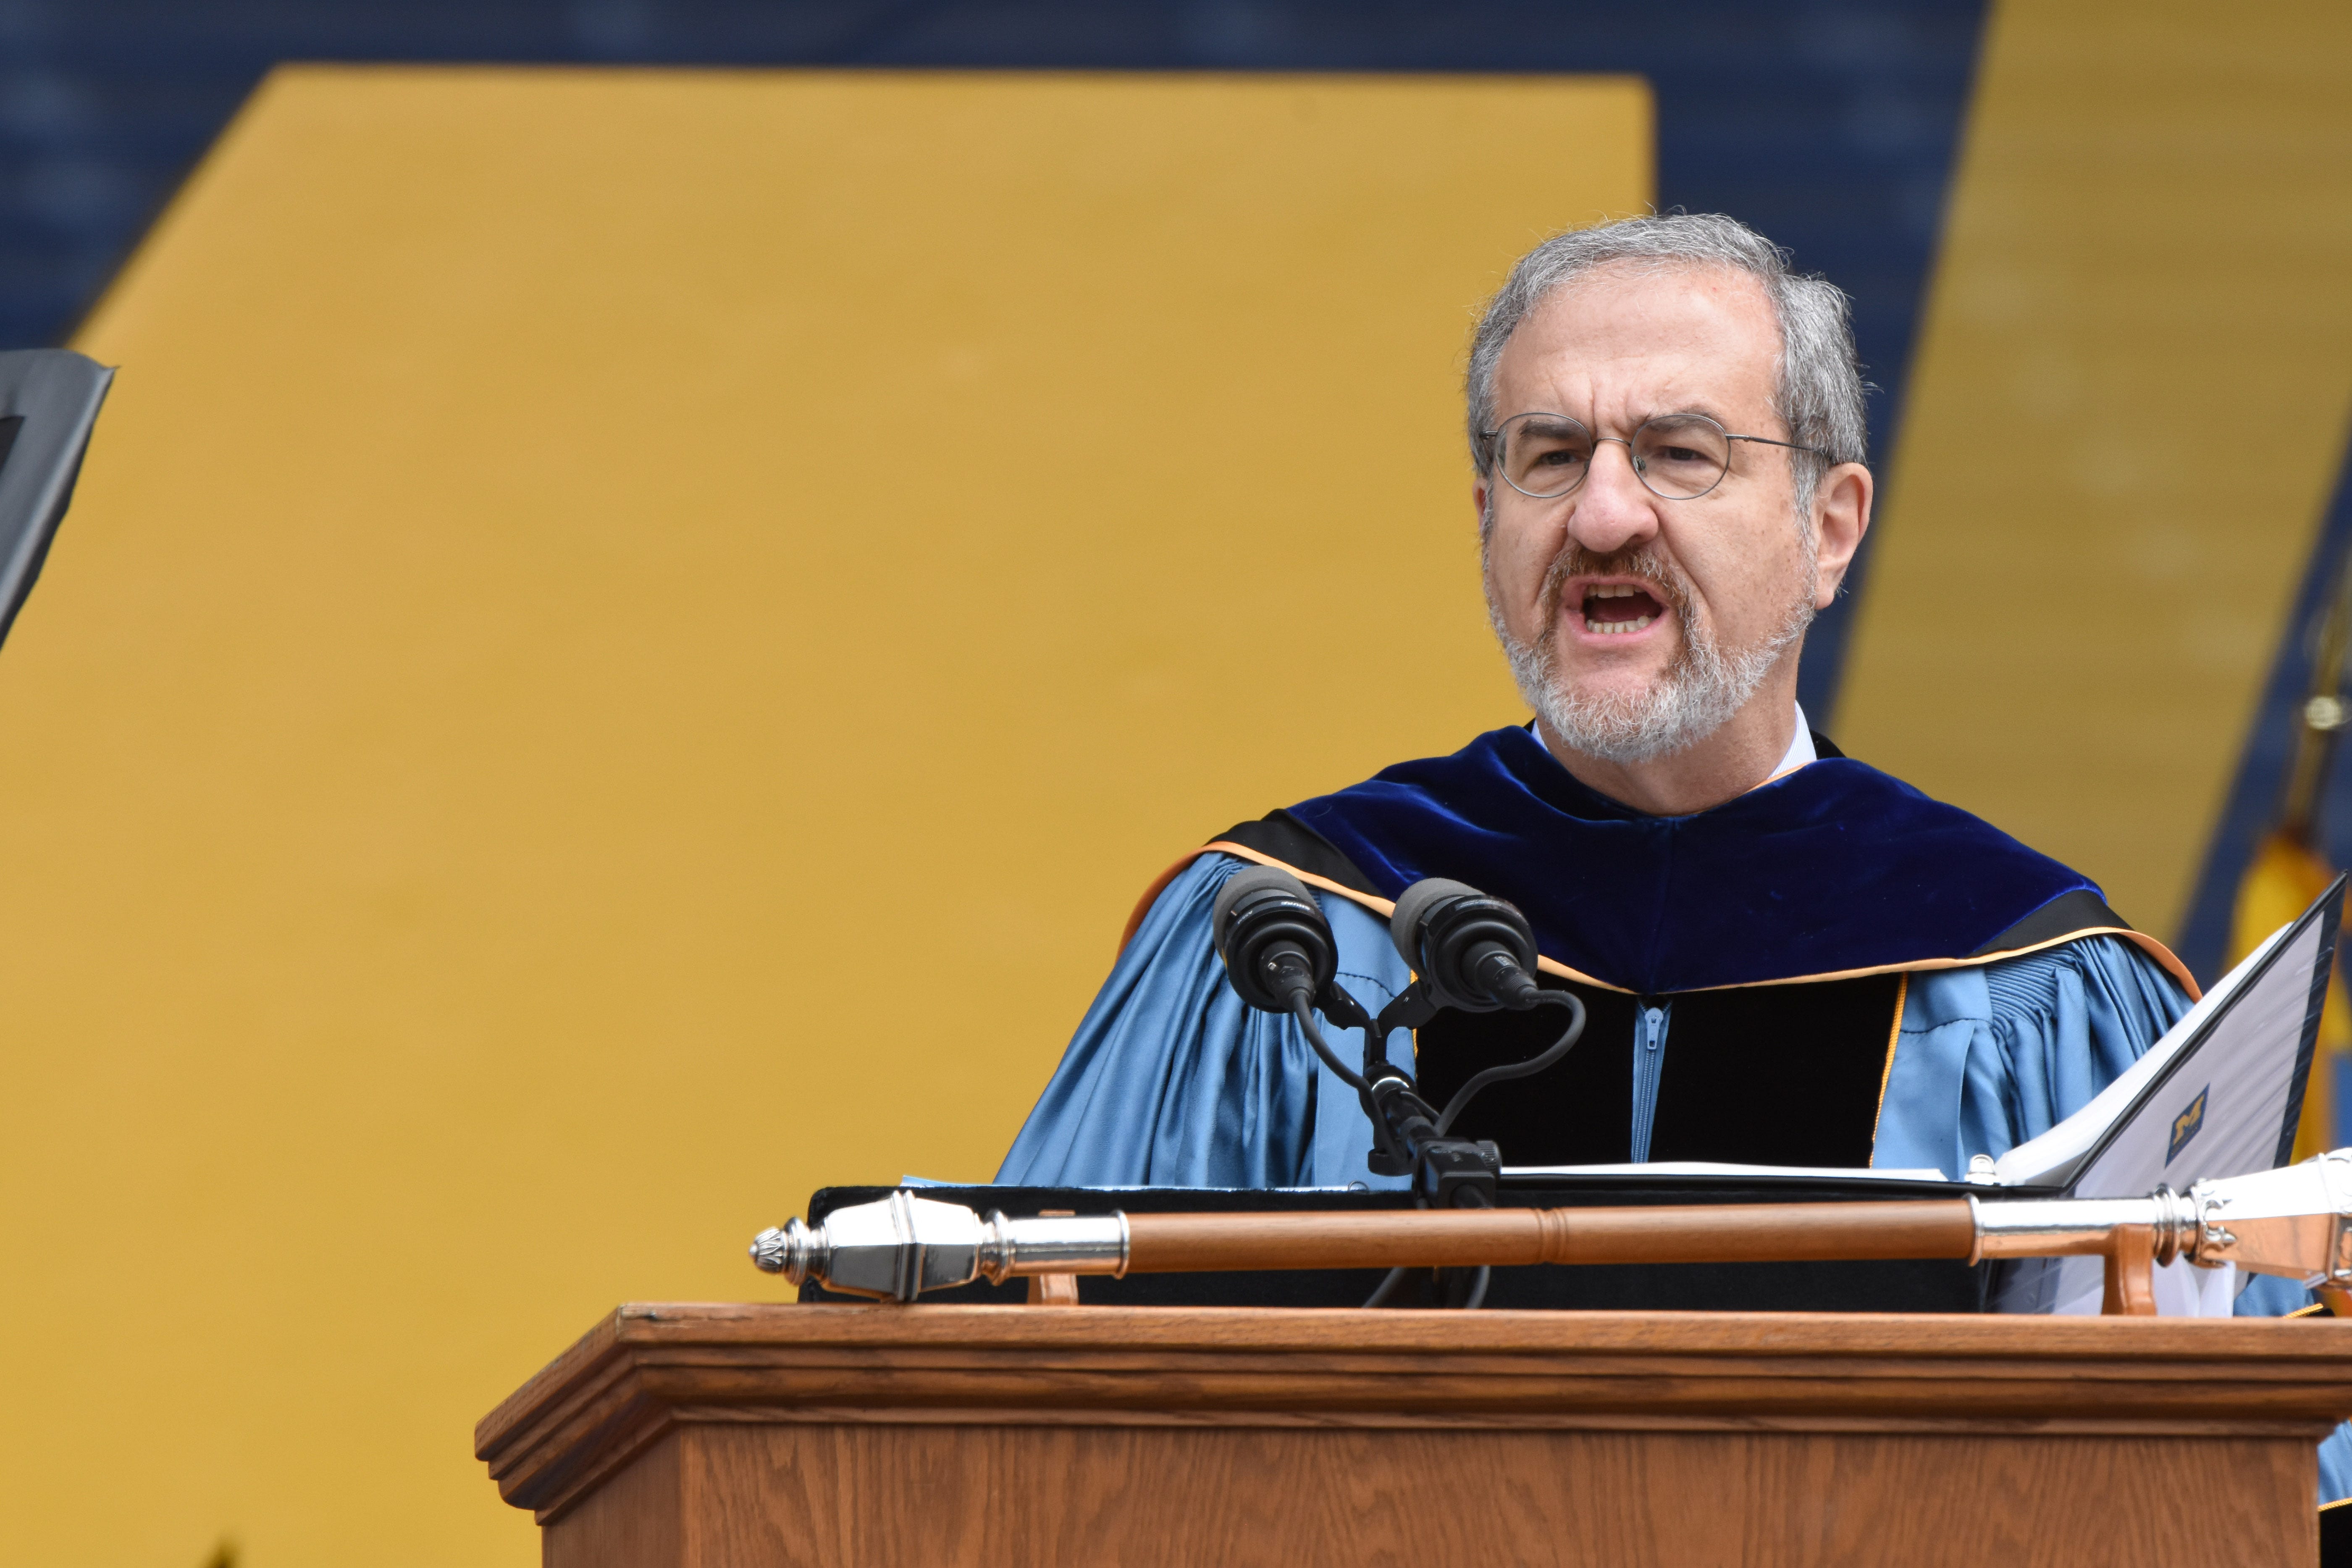 University of Michigan's President Mark Schlissel